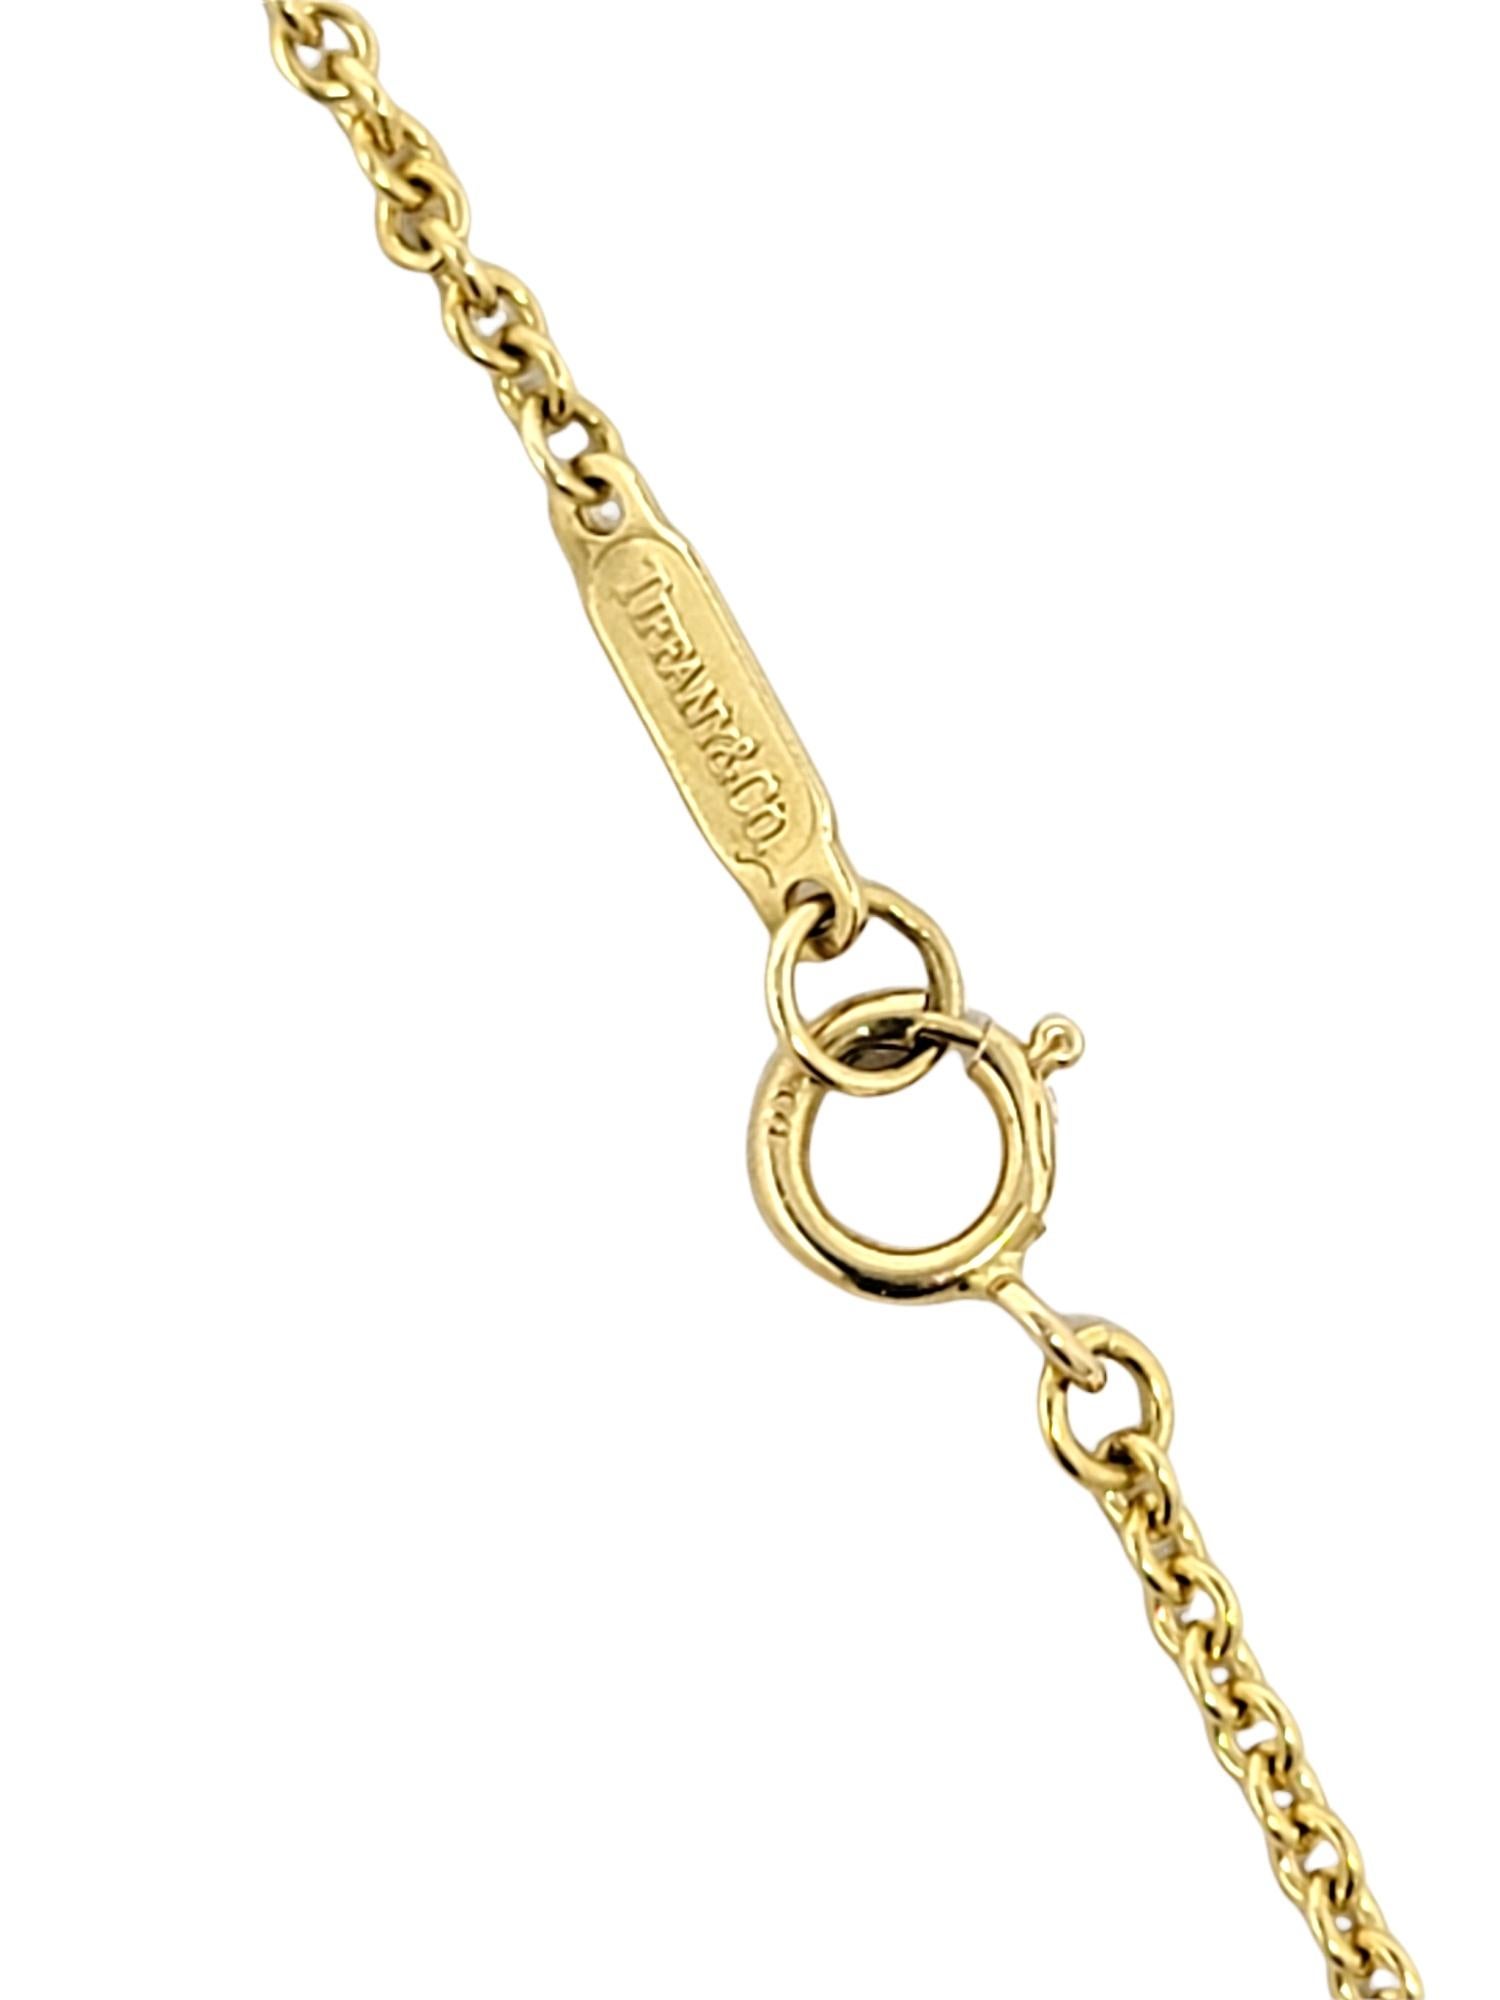 Tiffany & Co. Diamond Etoile Heart Shaped Pendant Necklace 18 Karat Yellow Gold 1